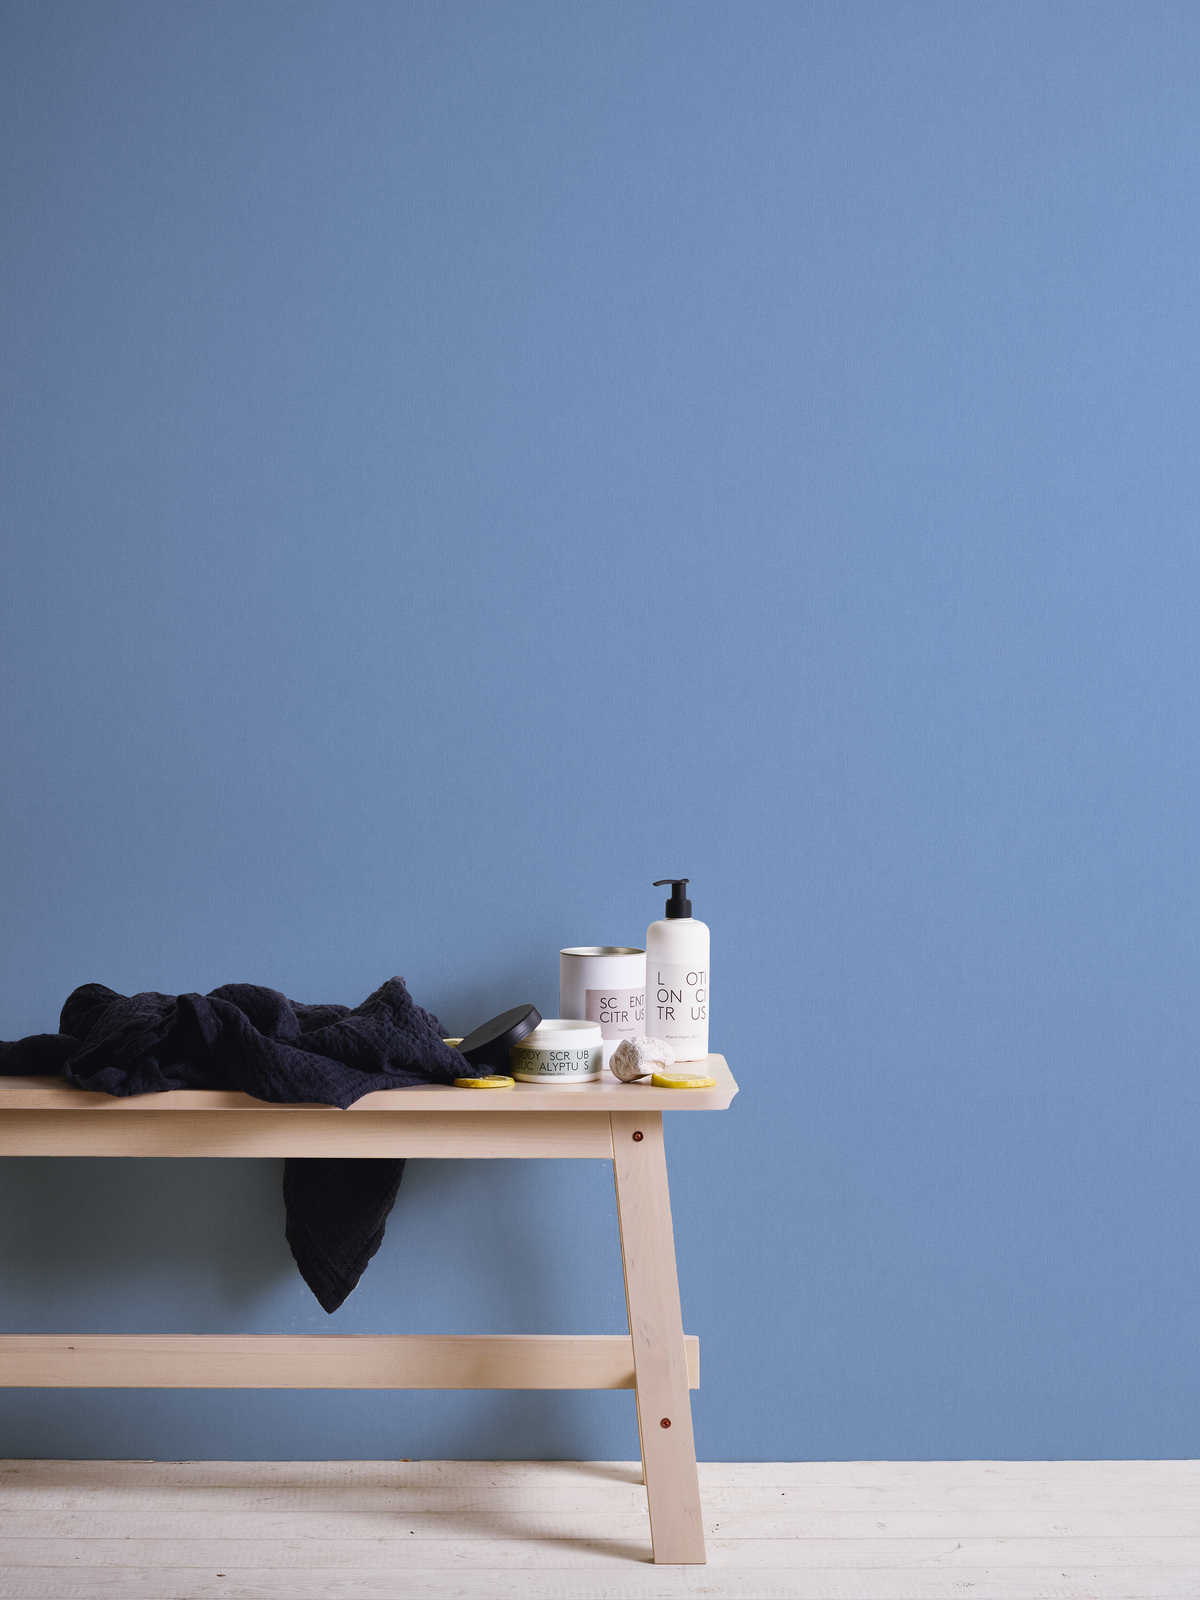             Wallpaper sky blue plain, textile texture & mottled effect - blue
        